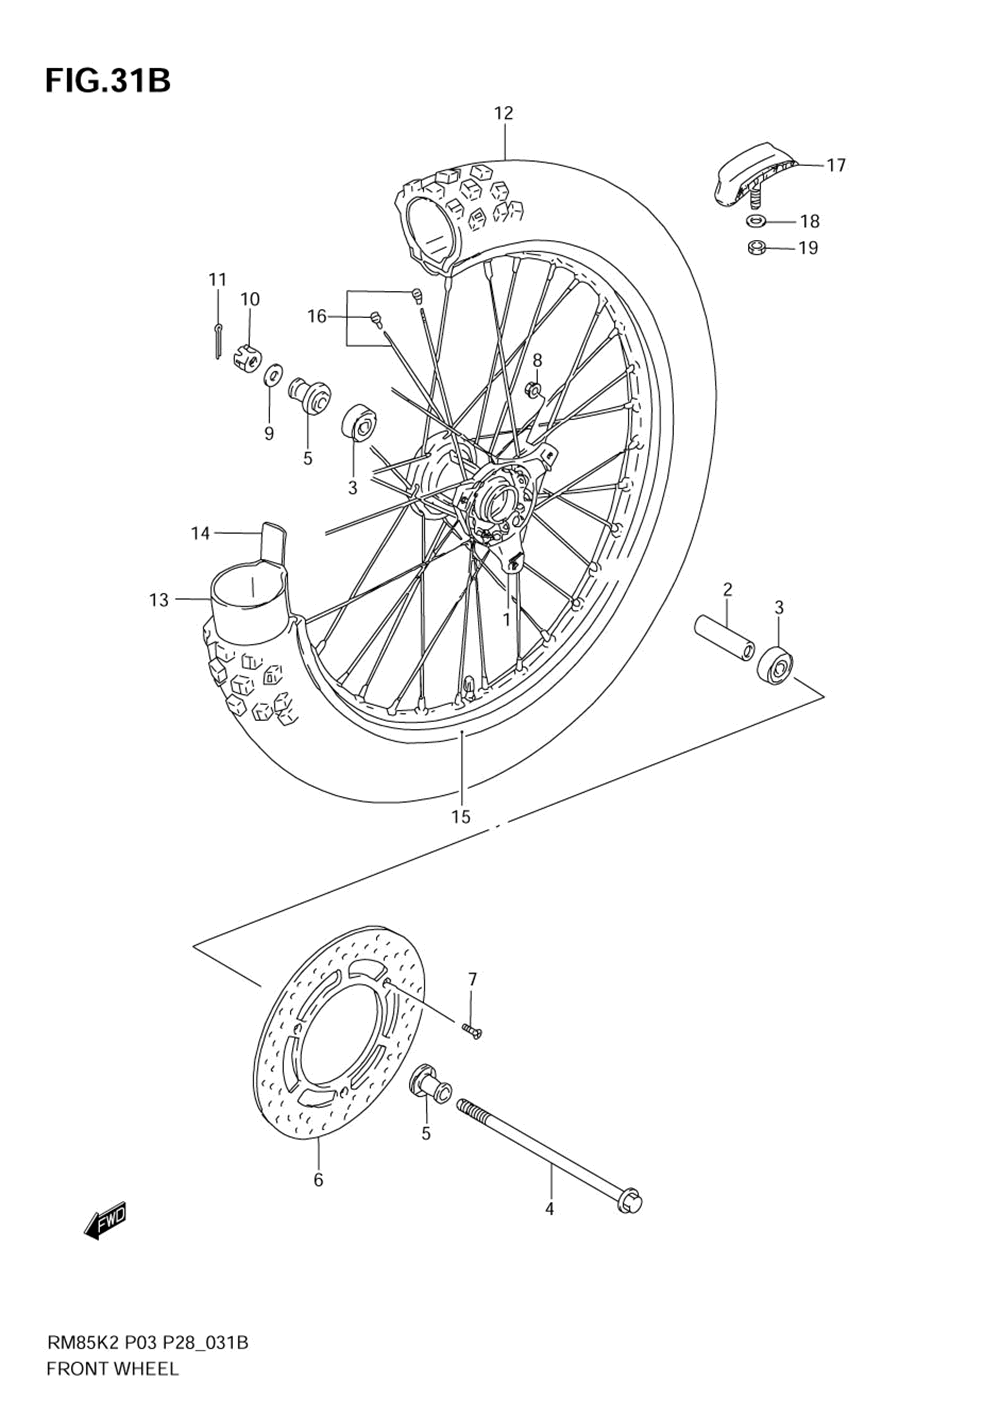 Front wheel (rm85lk3_lk4)